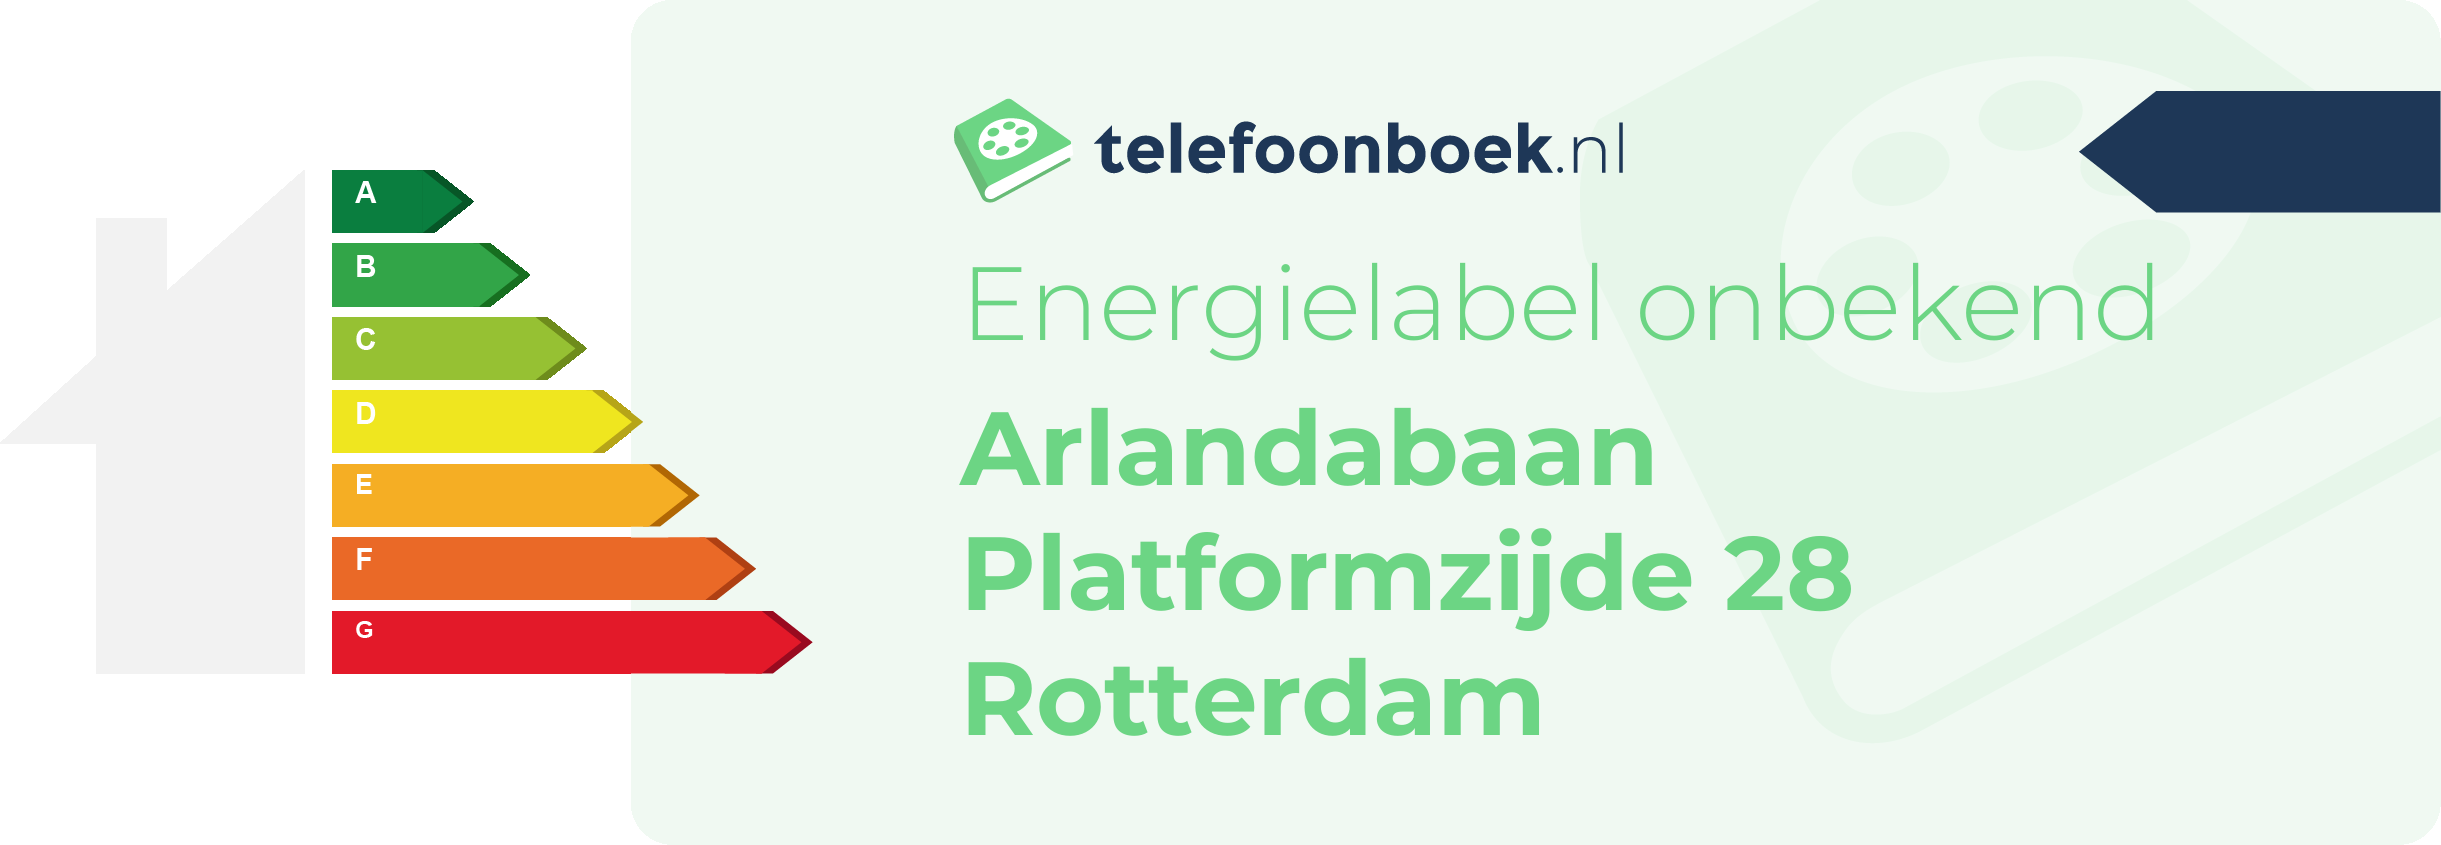 Energielabel Arlandabaan Platformzijde 28 Rotterdam